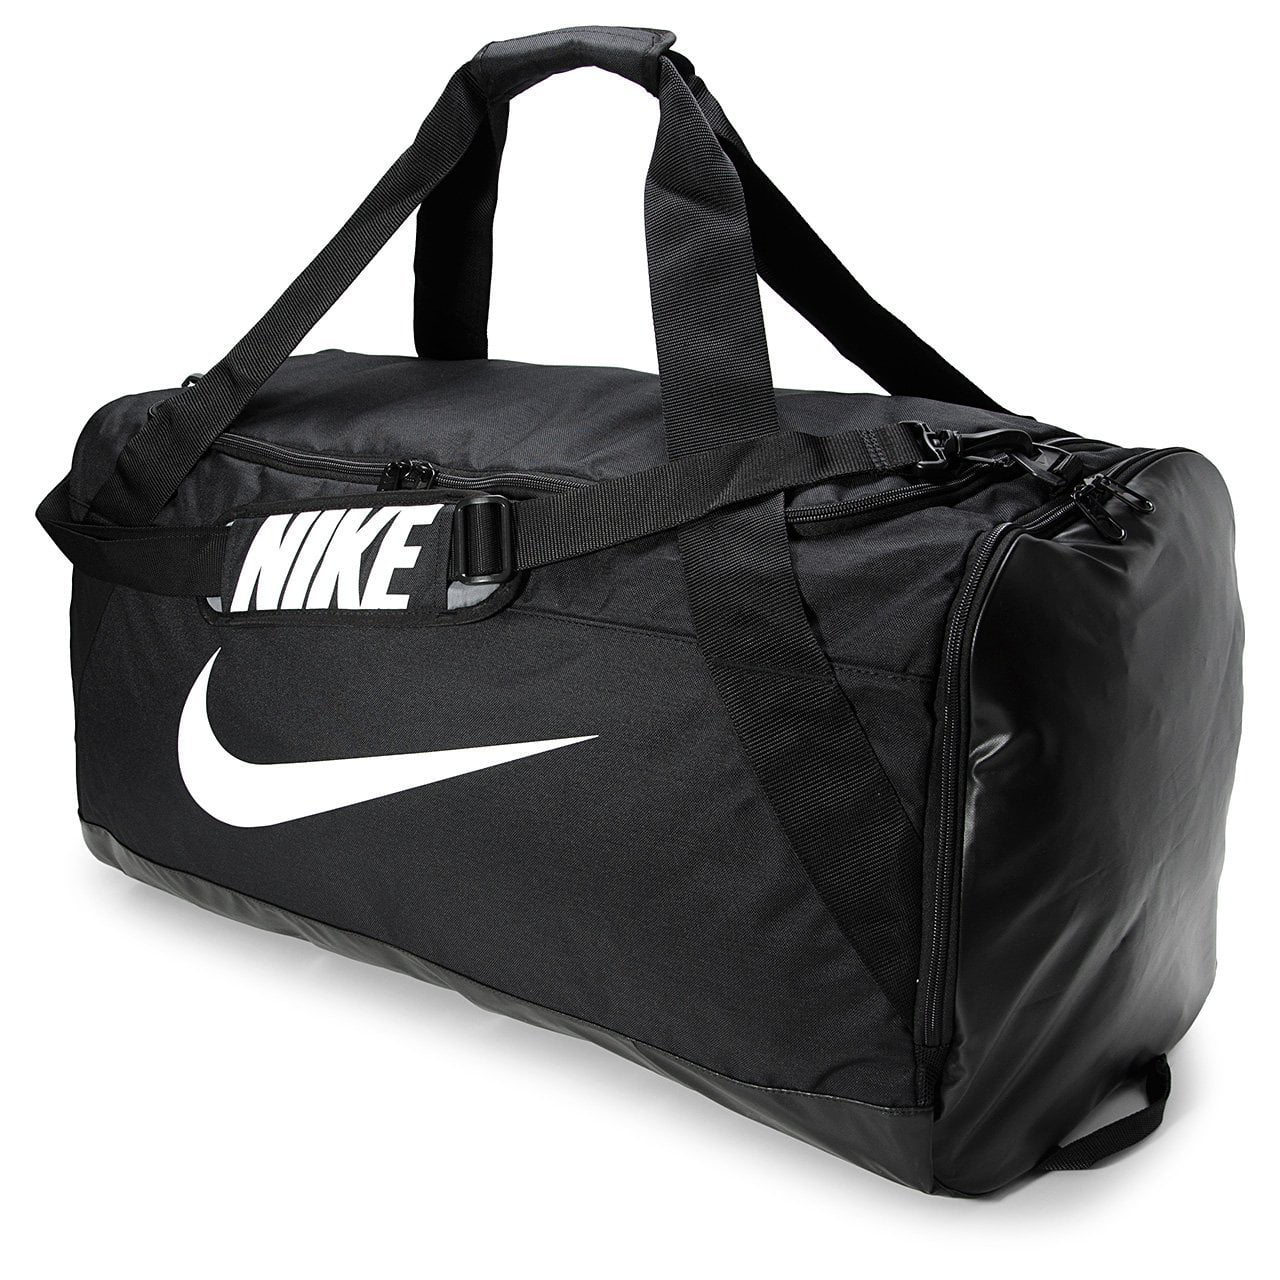 Nike - Nike NKBA5352 010 XL Brasilia Extra Large Duffel Bag Black/Black/White Duffel Bags ...